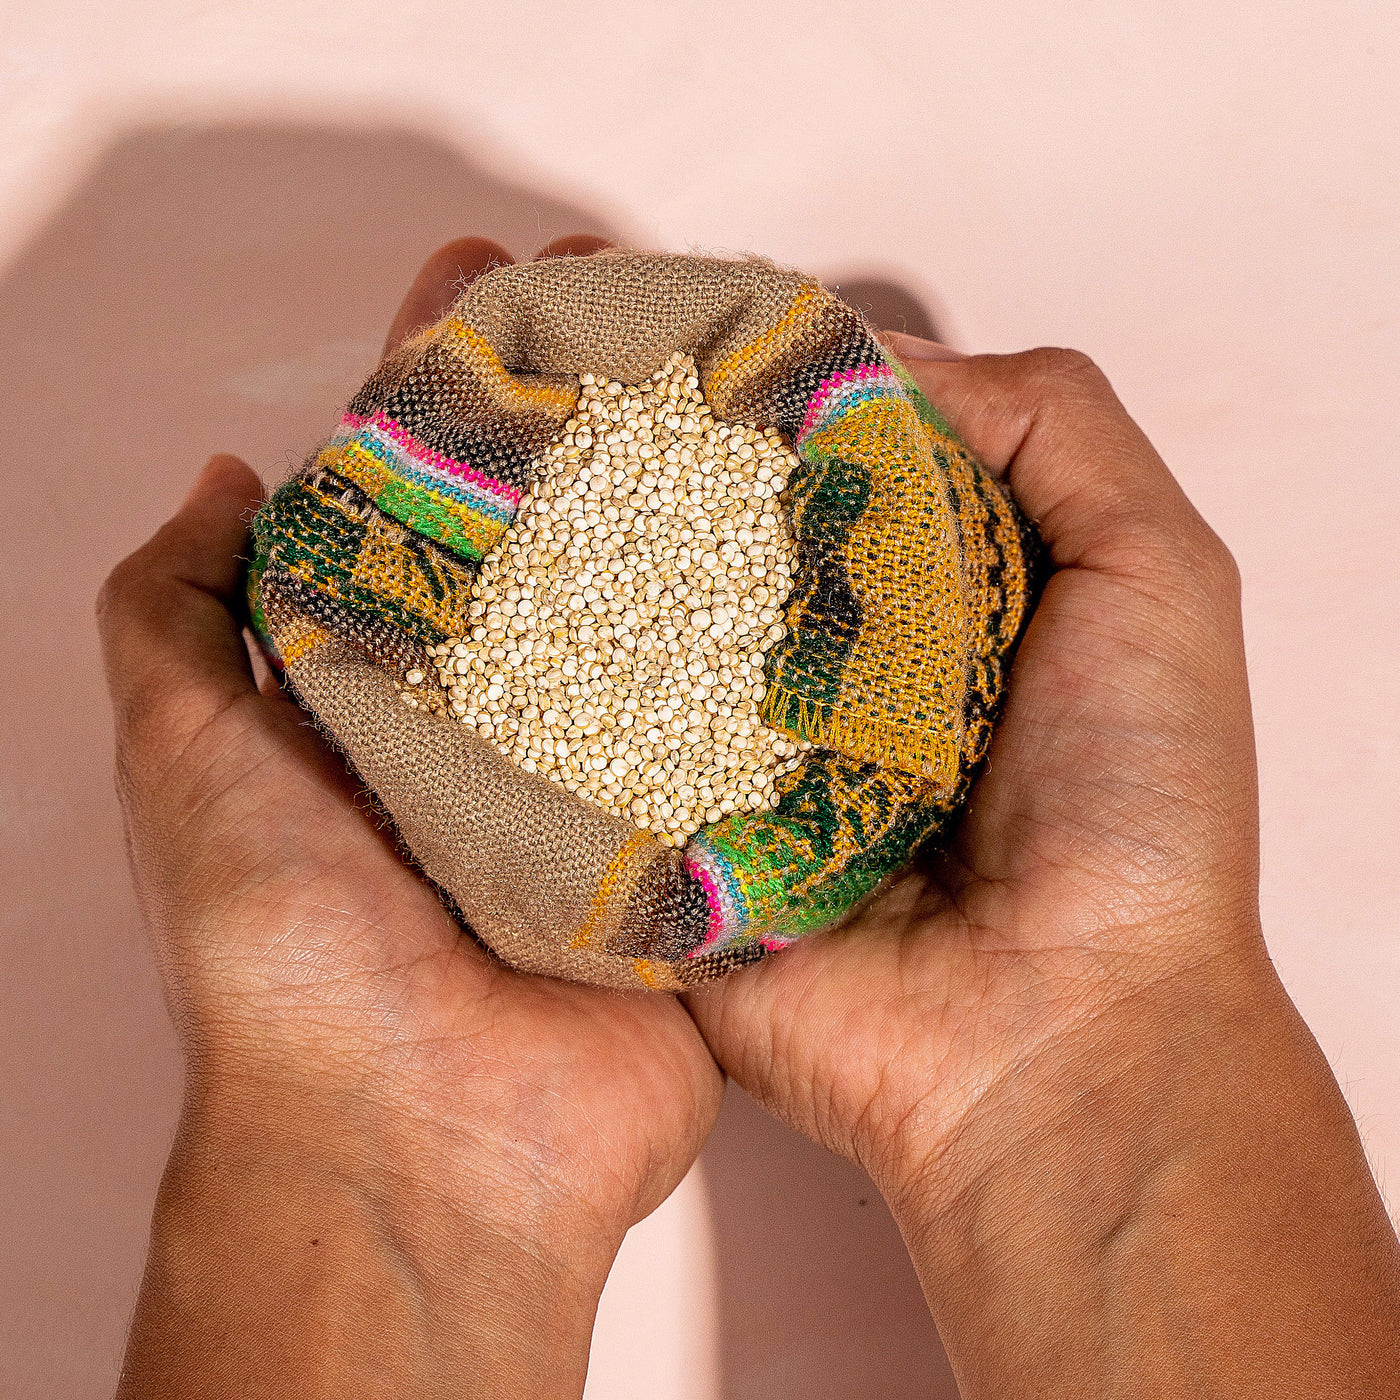 white quinoa on a handamade peruvian handbag